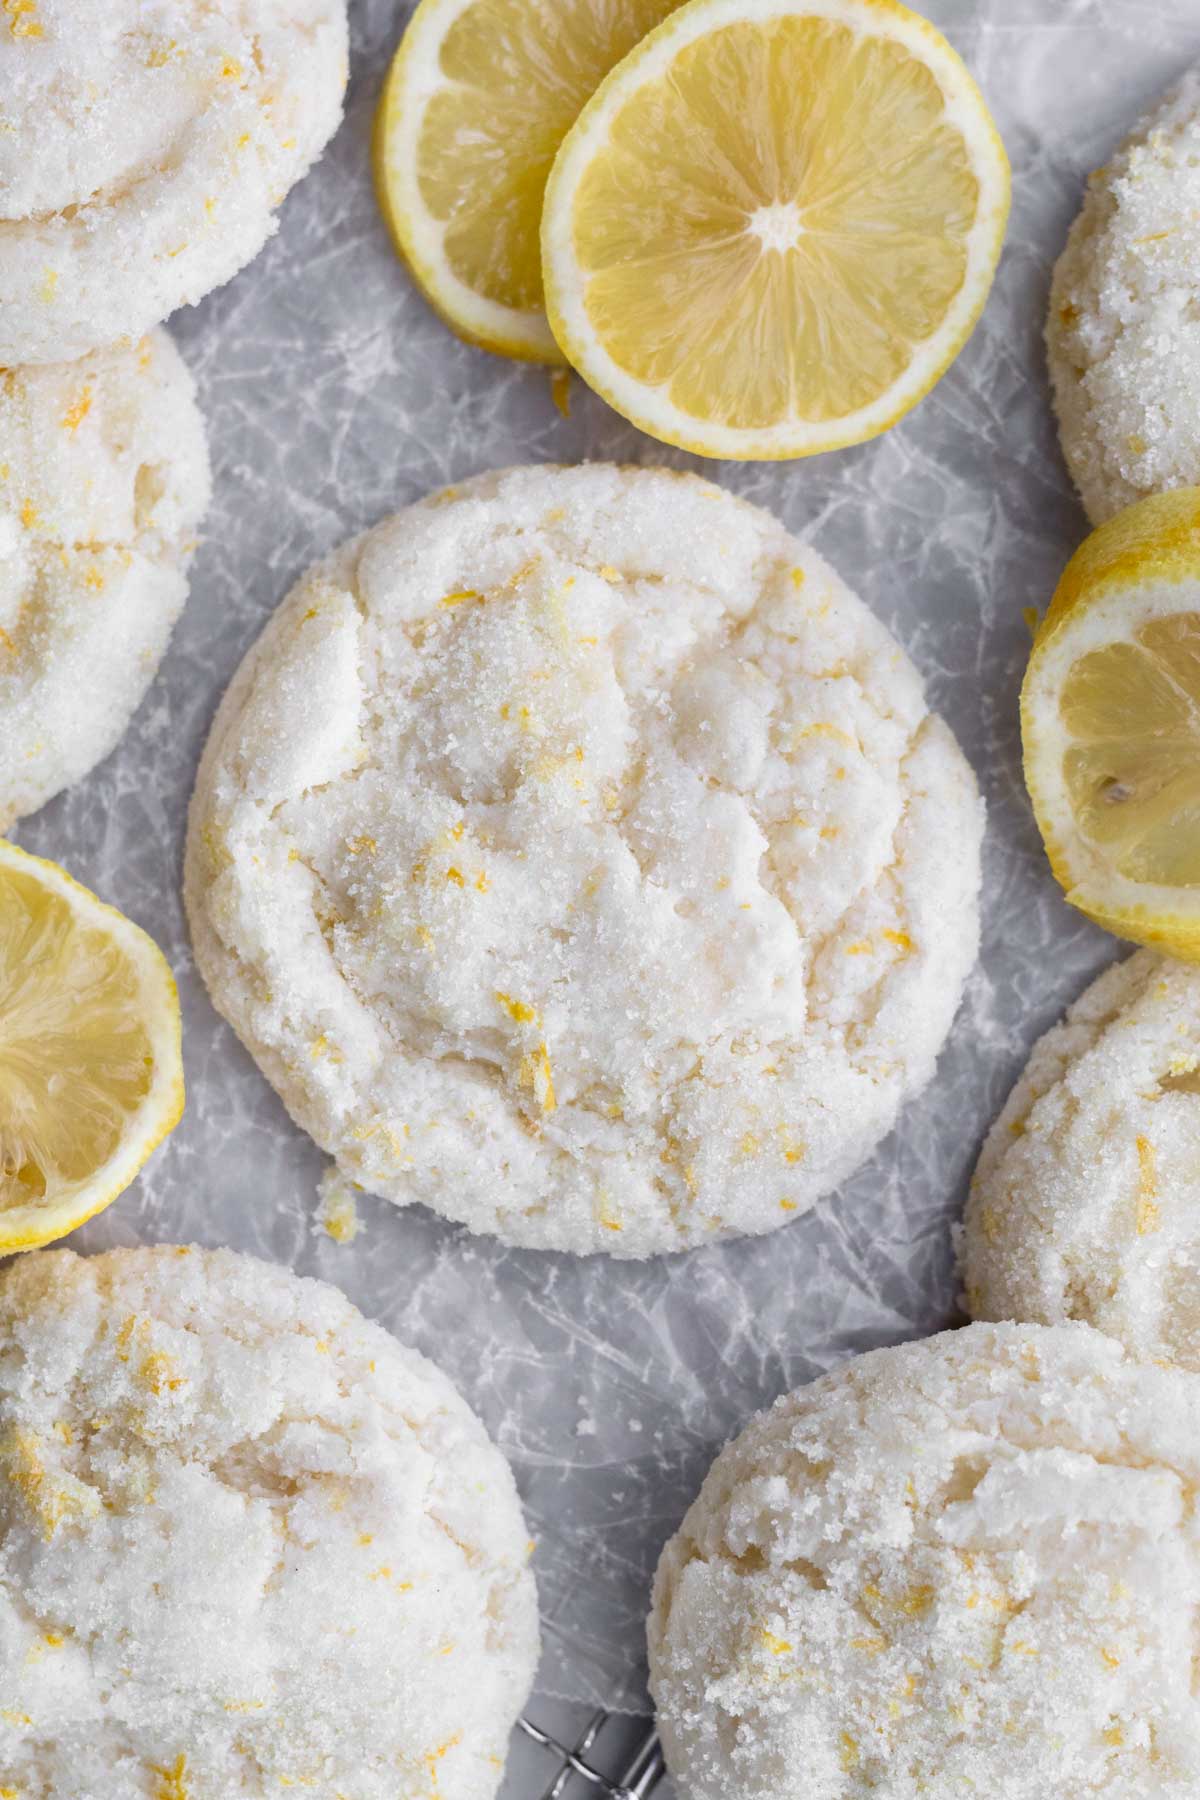 Lemon zest strands embedded into the Lemon Sugar Cookie give a pop of flavor and color.